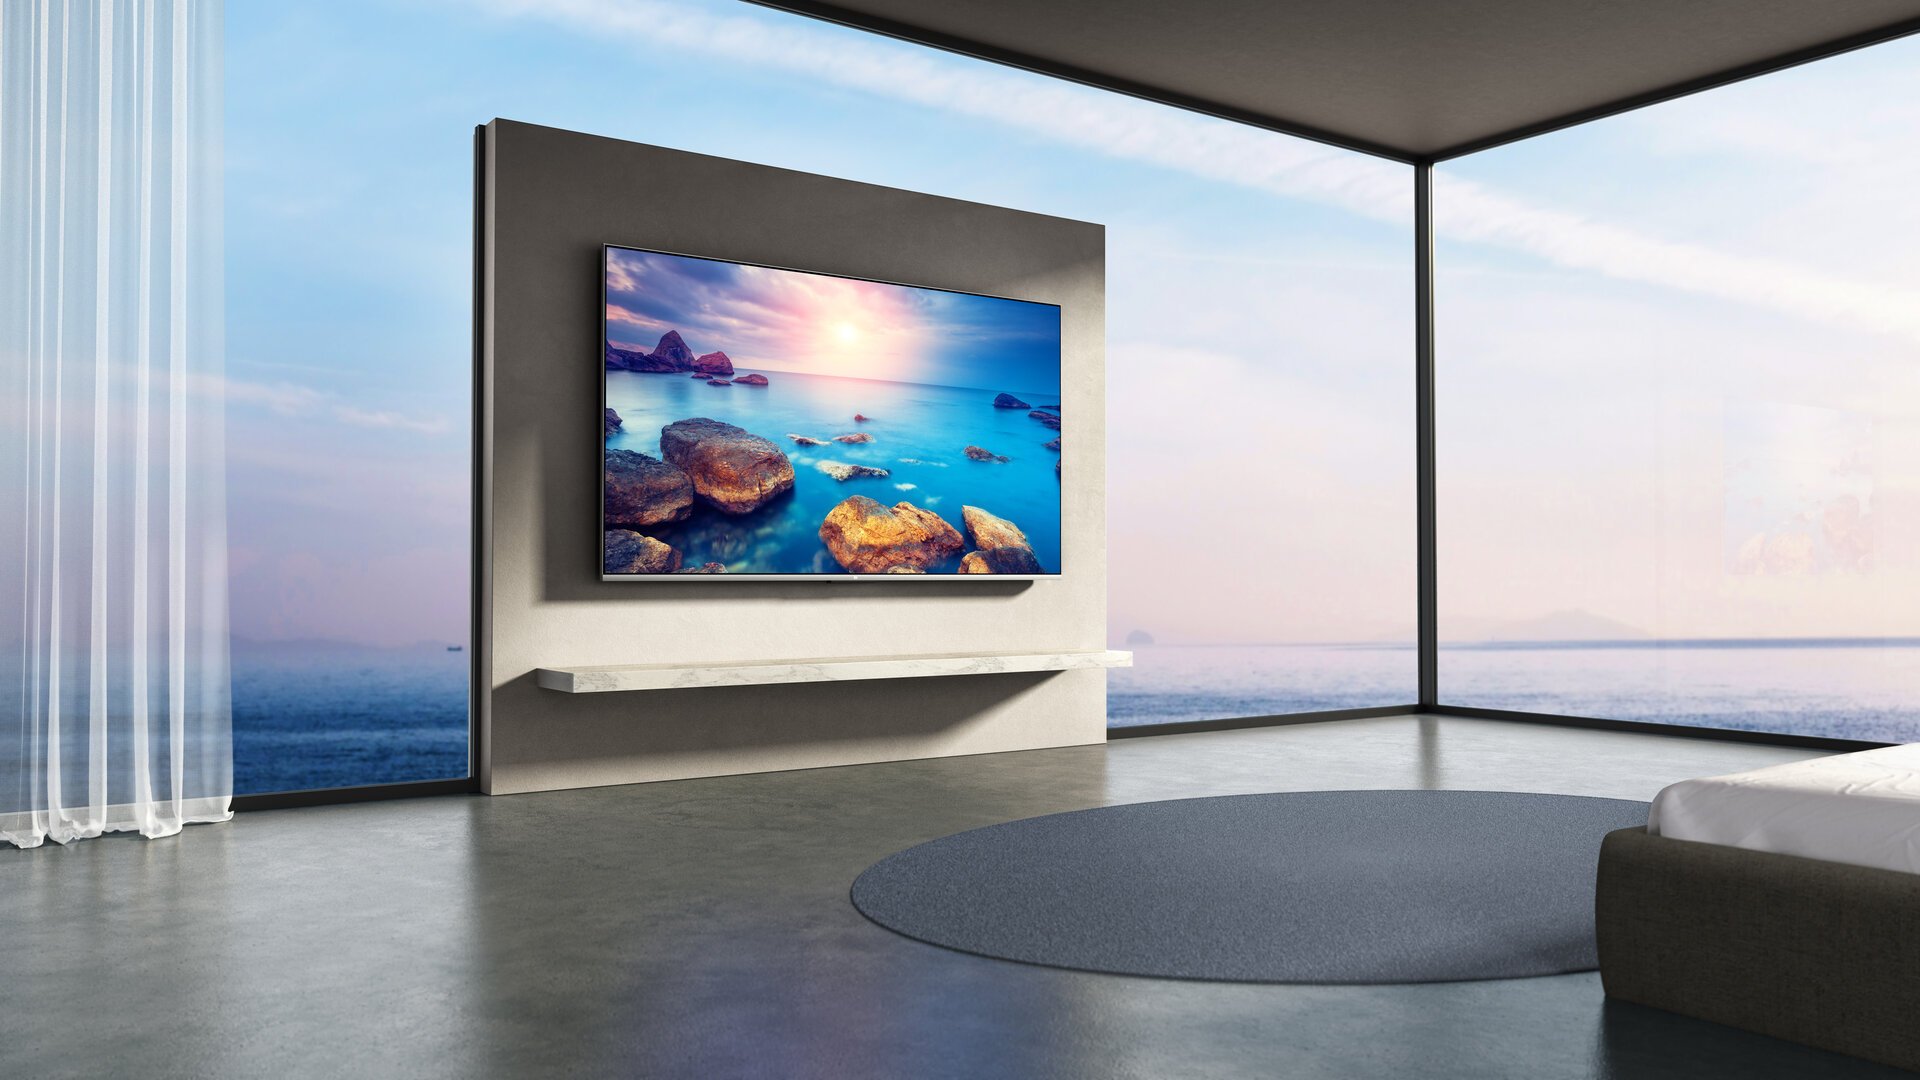 Mi TV Q1 75” promete ser a smart TV mais completa de 2021.